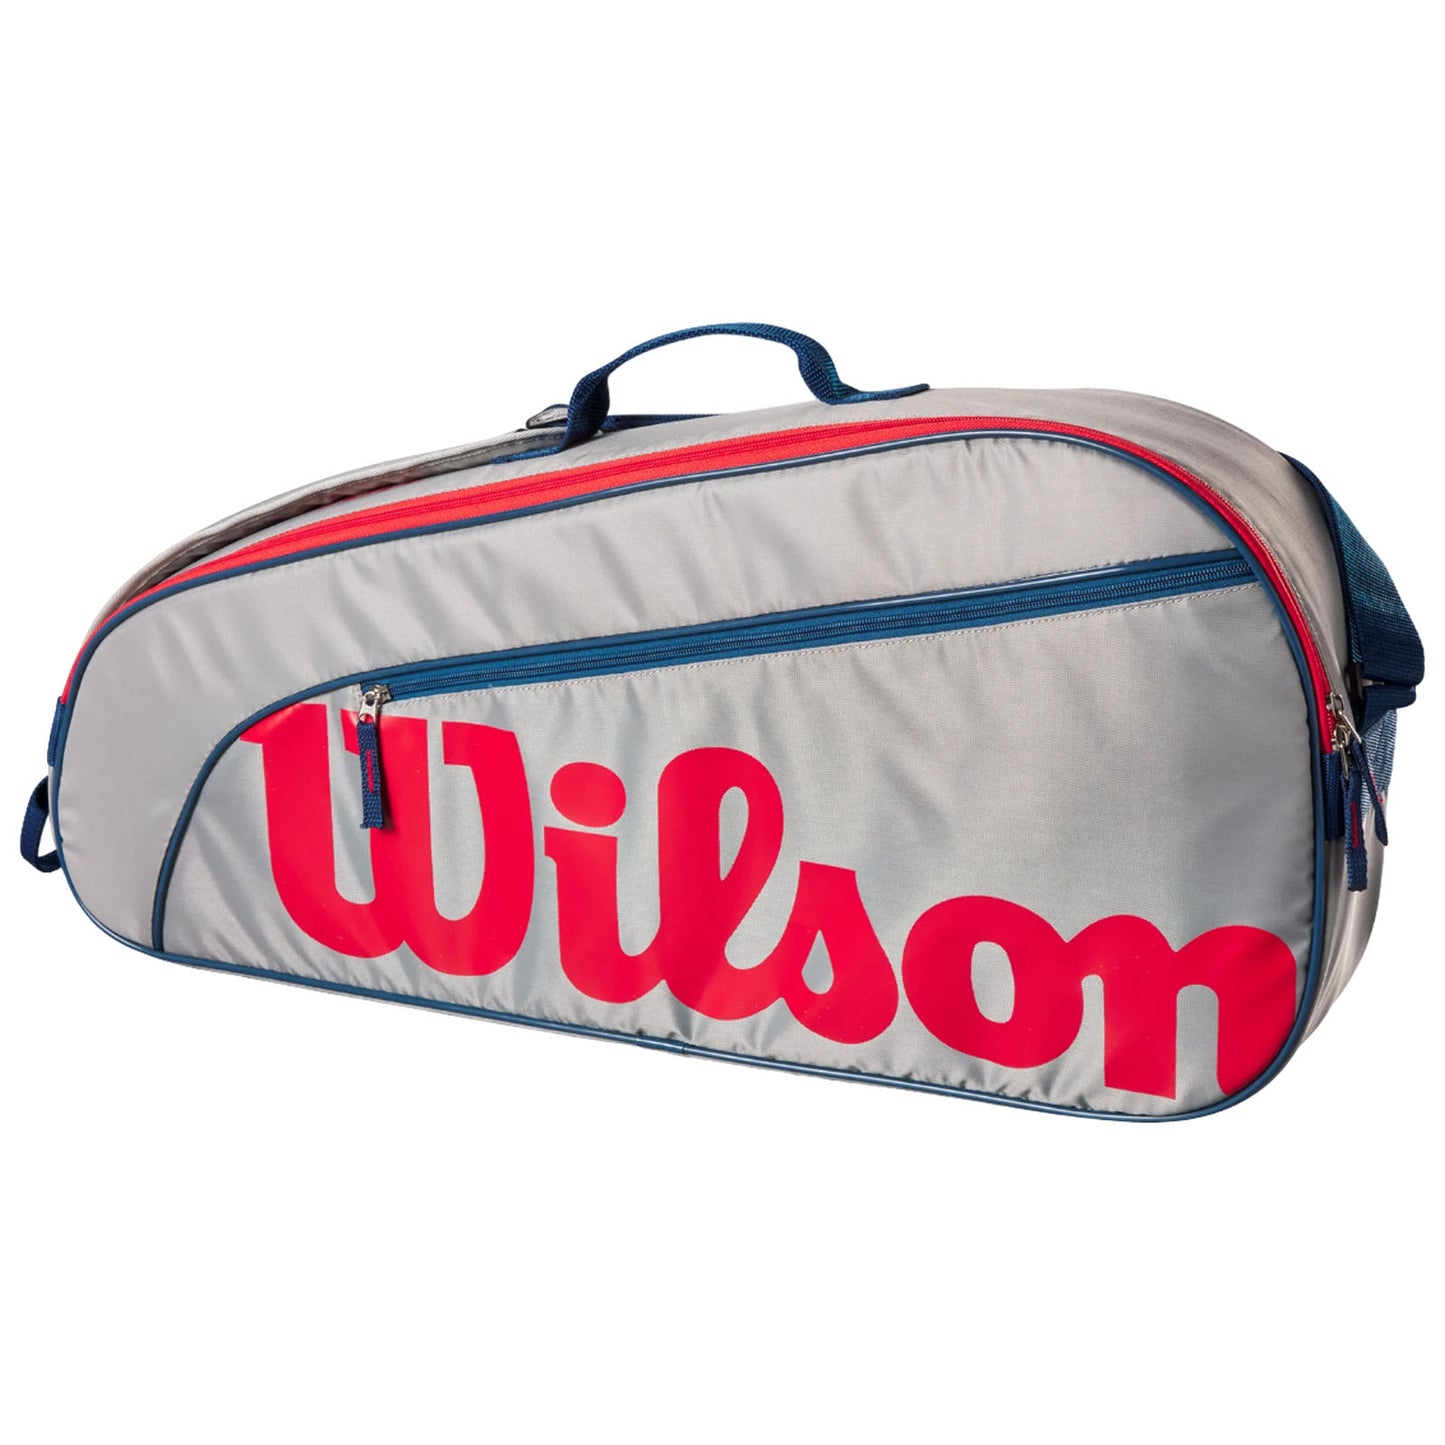 Wilson Junior 3 Tennis Racket Bag